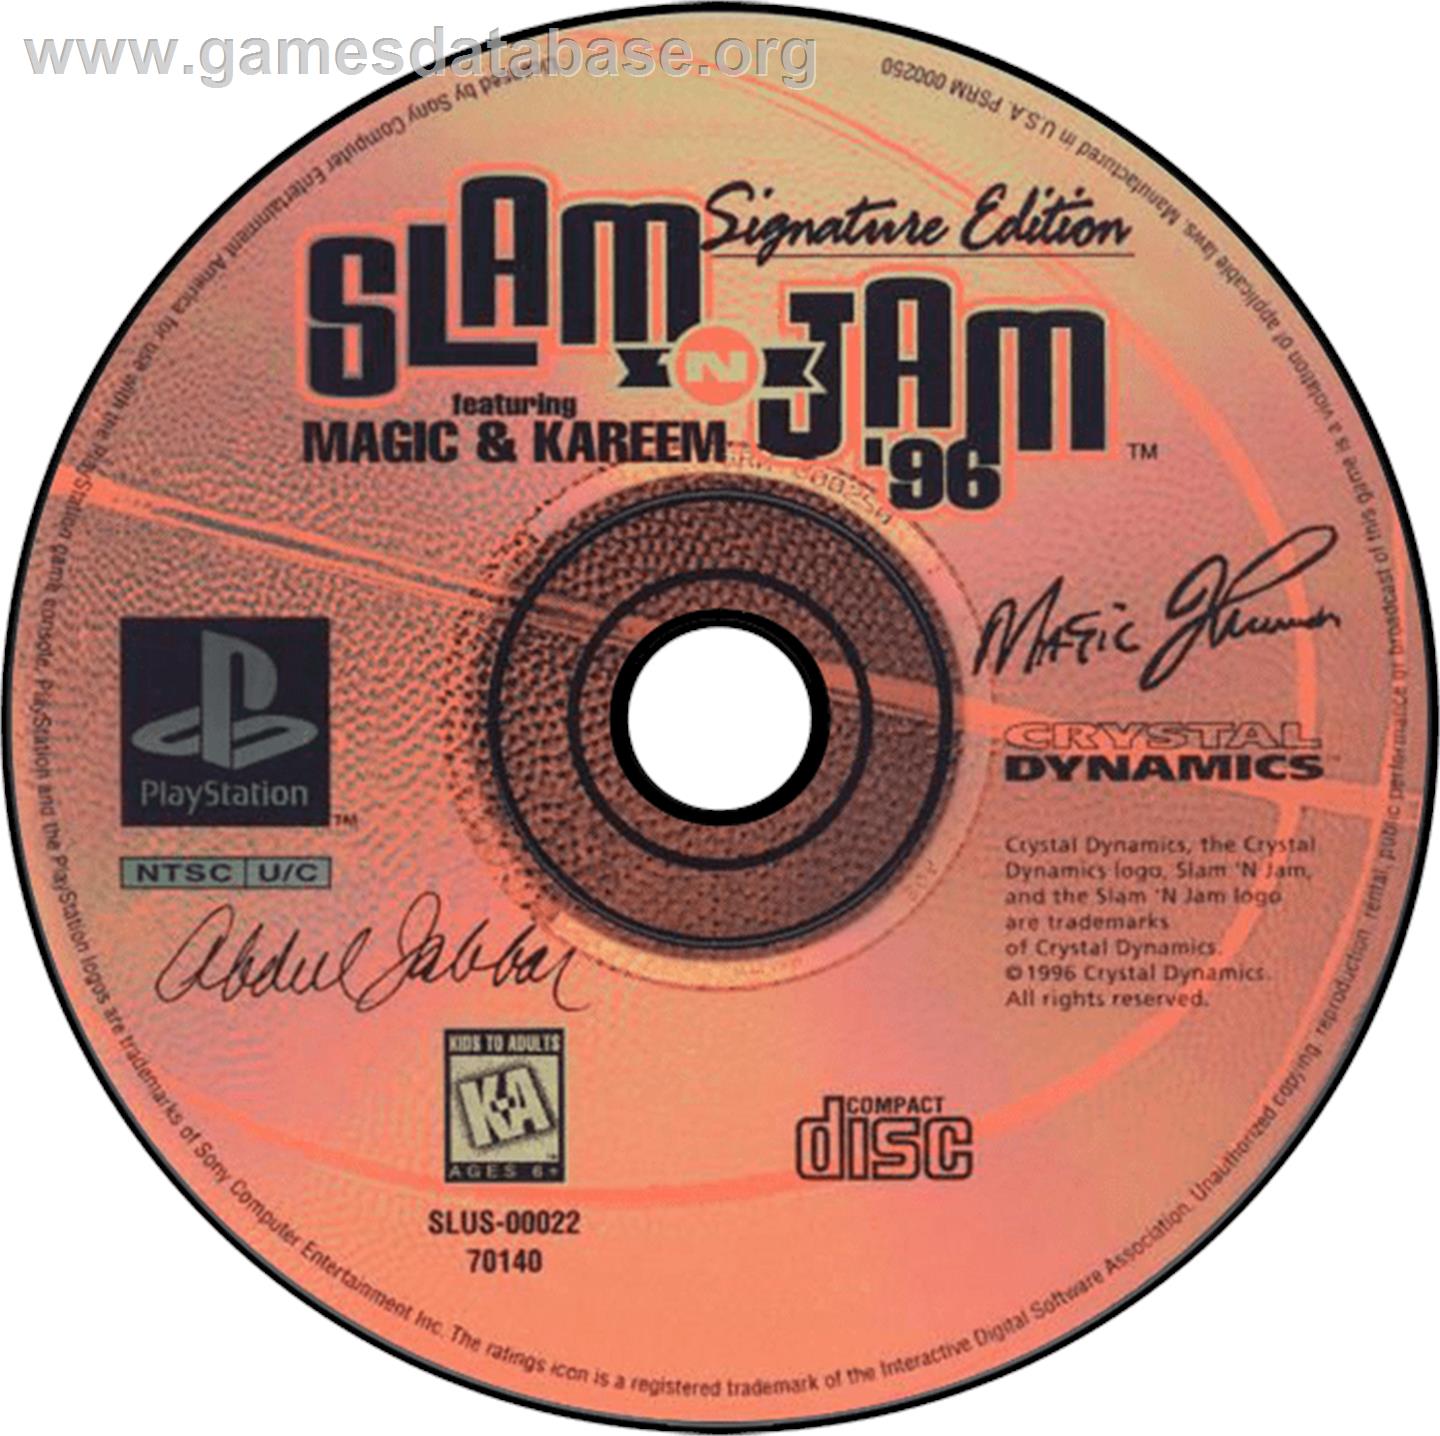 Slam 'N Jam '96 featuring Magic and Kareem - Sony Playstation - Artwork - Disc